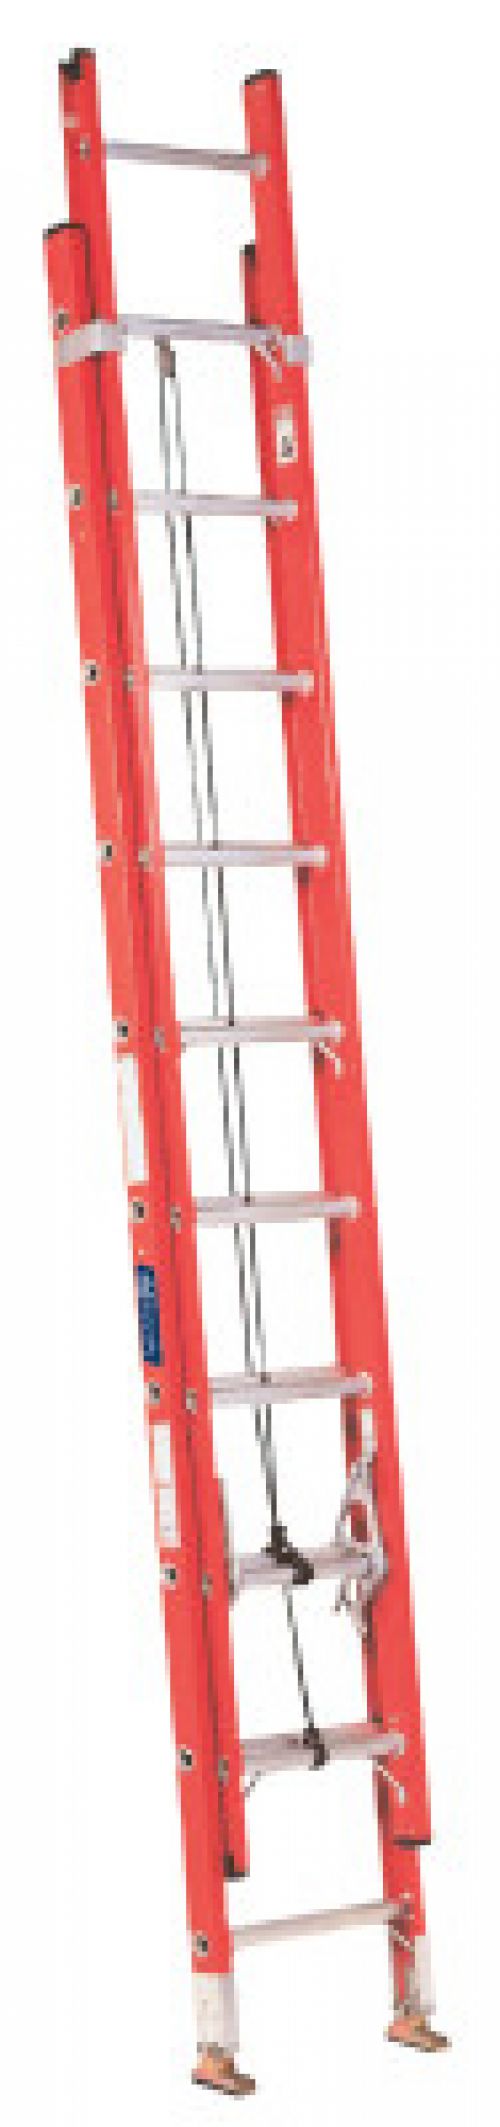 FE3200 Series Fiberglass Channel Extension Ladder, 24 ft, Class IA, 300 lb